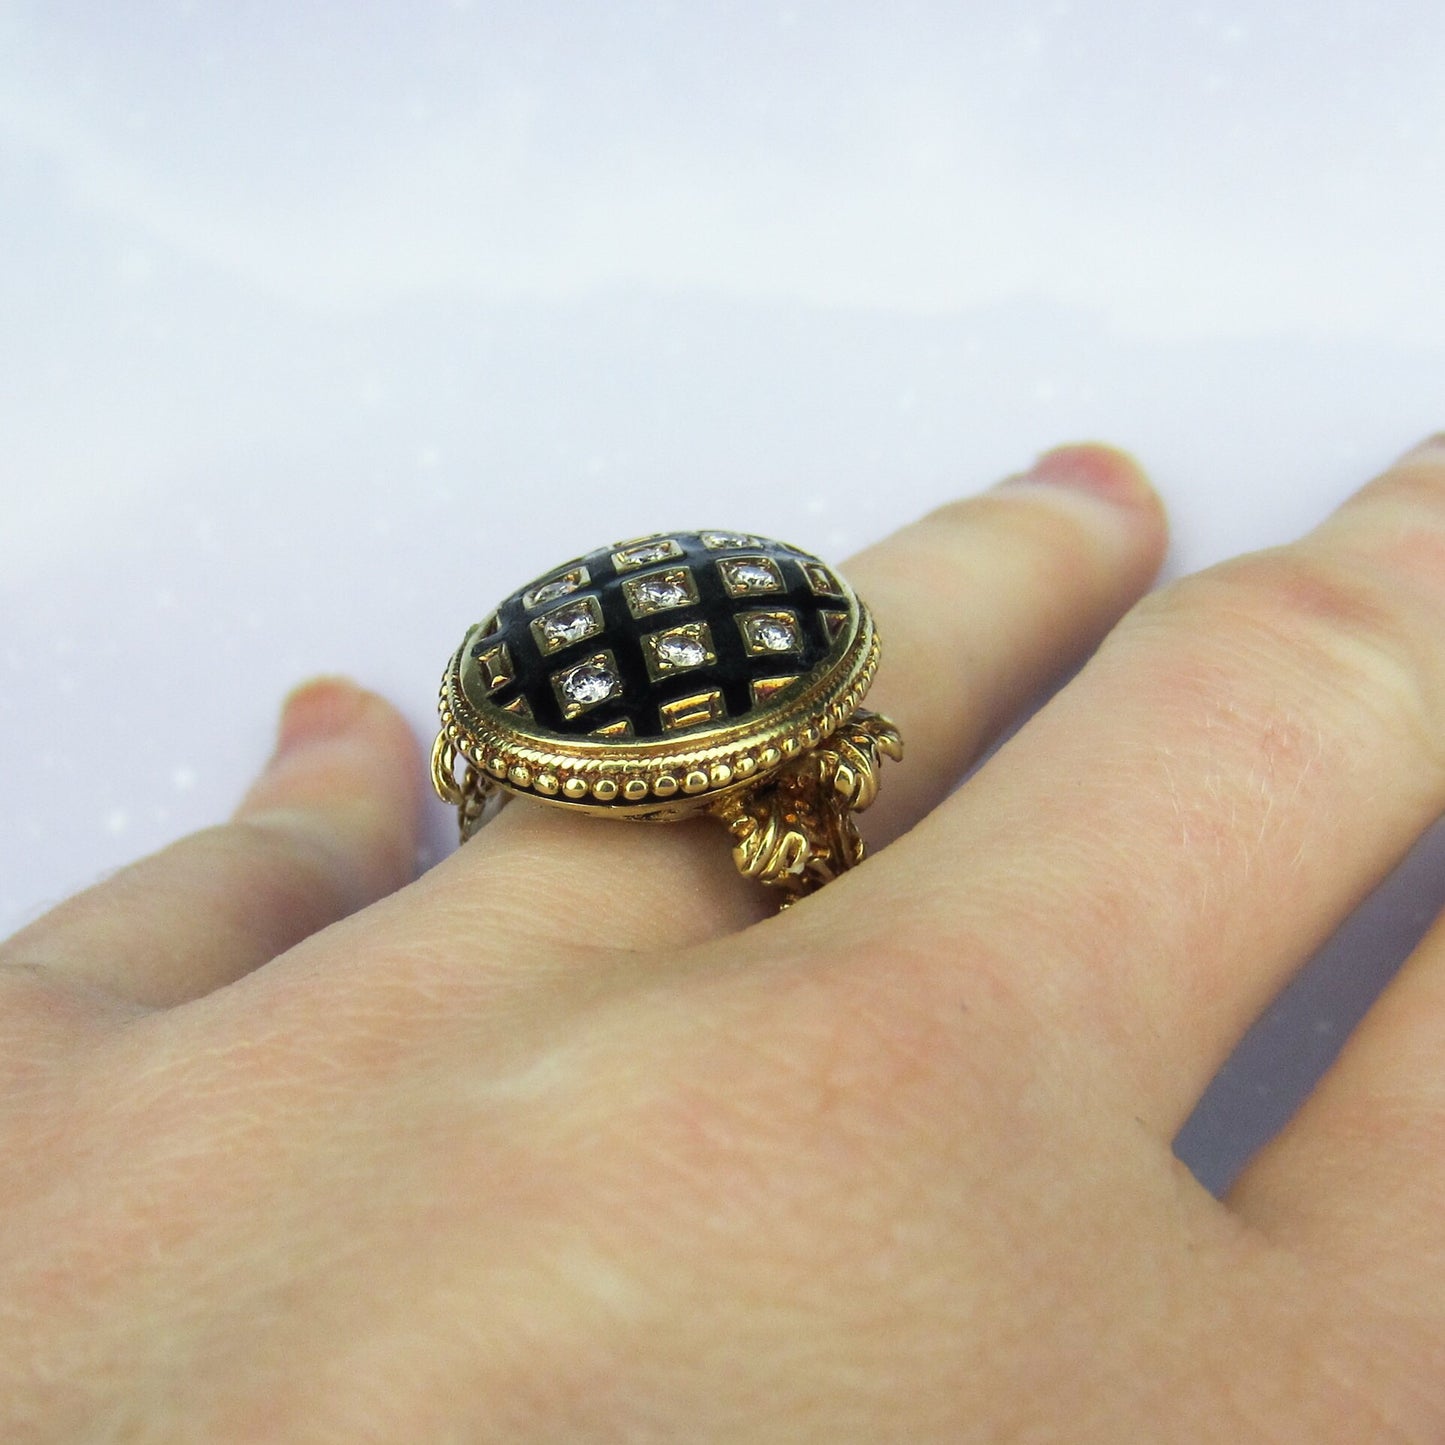 SOLD--Fantastic 1940's Victorian Revival Diamond Enamel Ring 14k